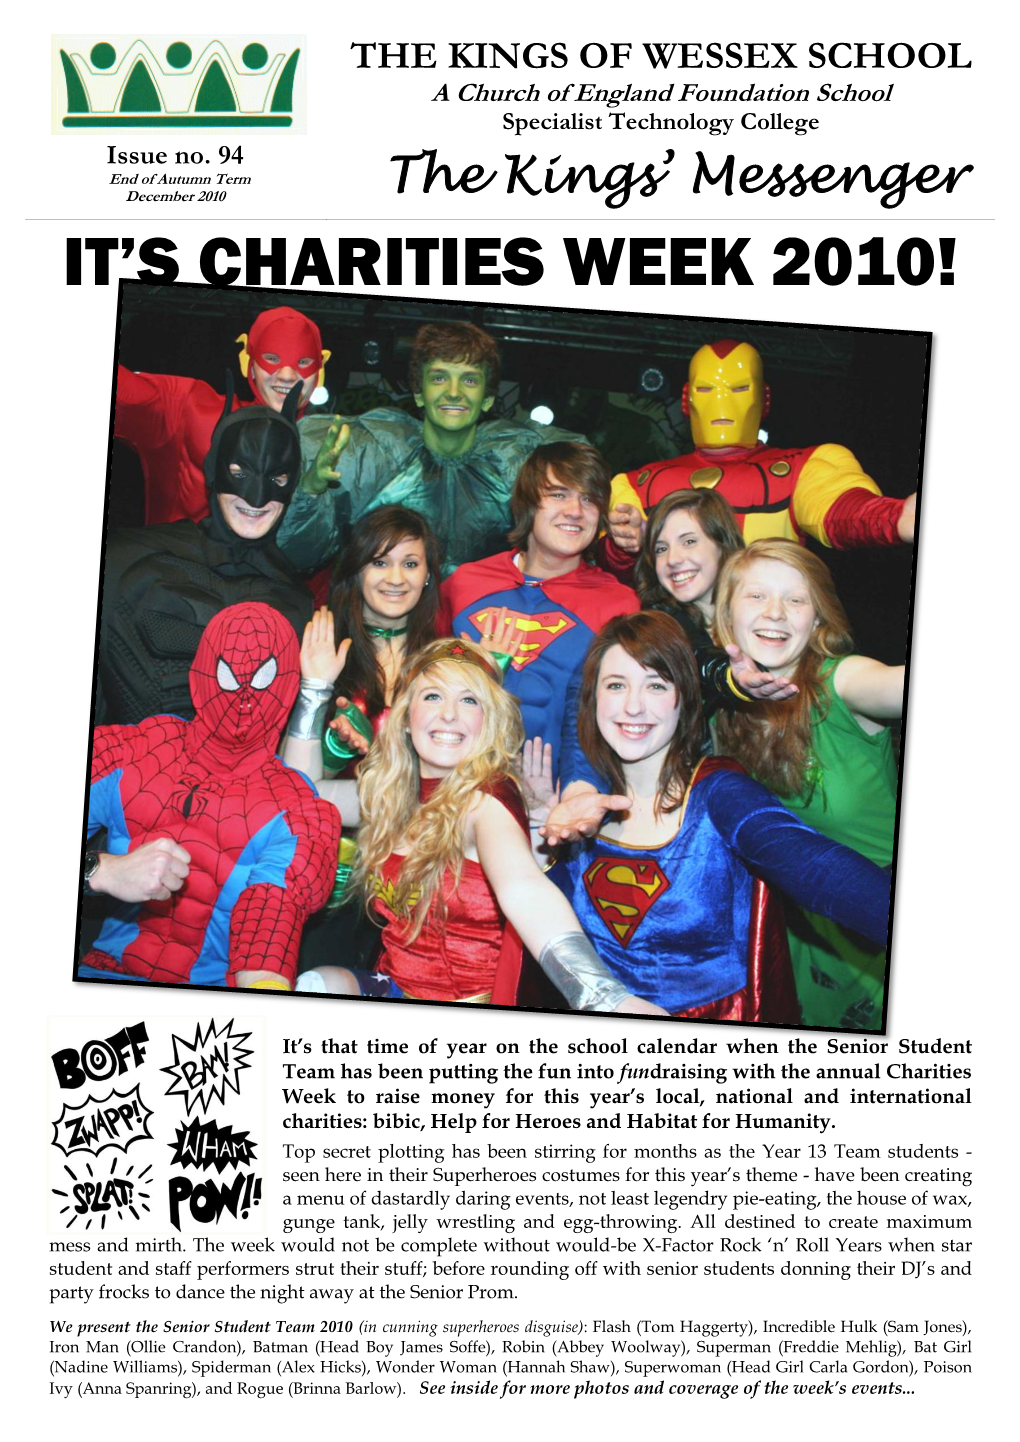 It's Charities Week 2010!